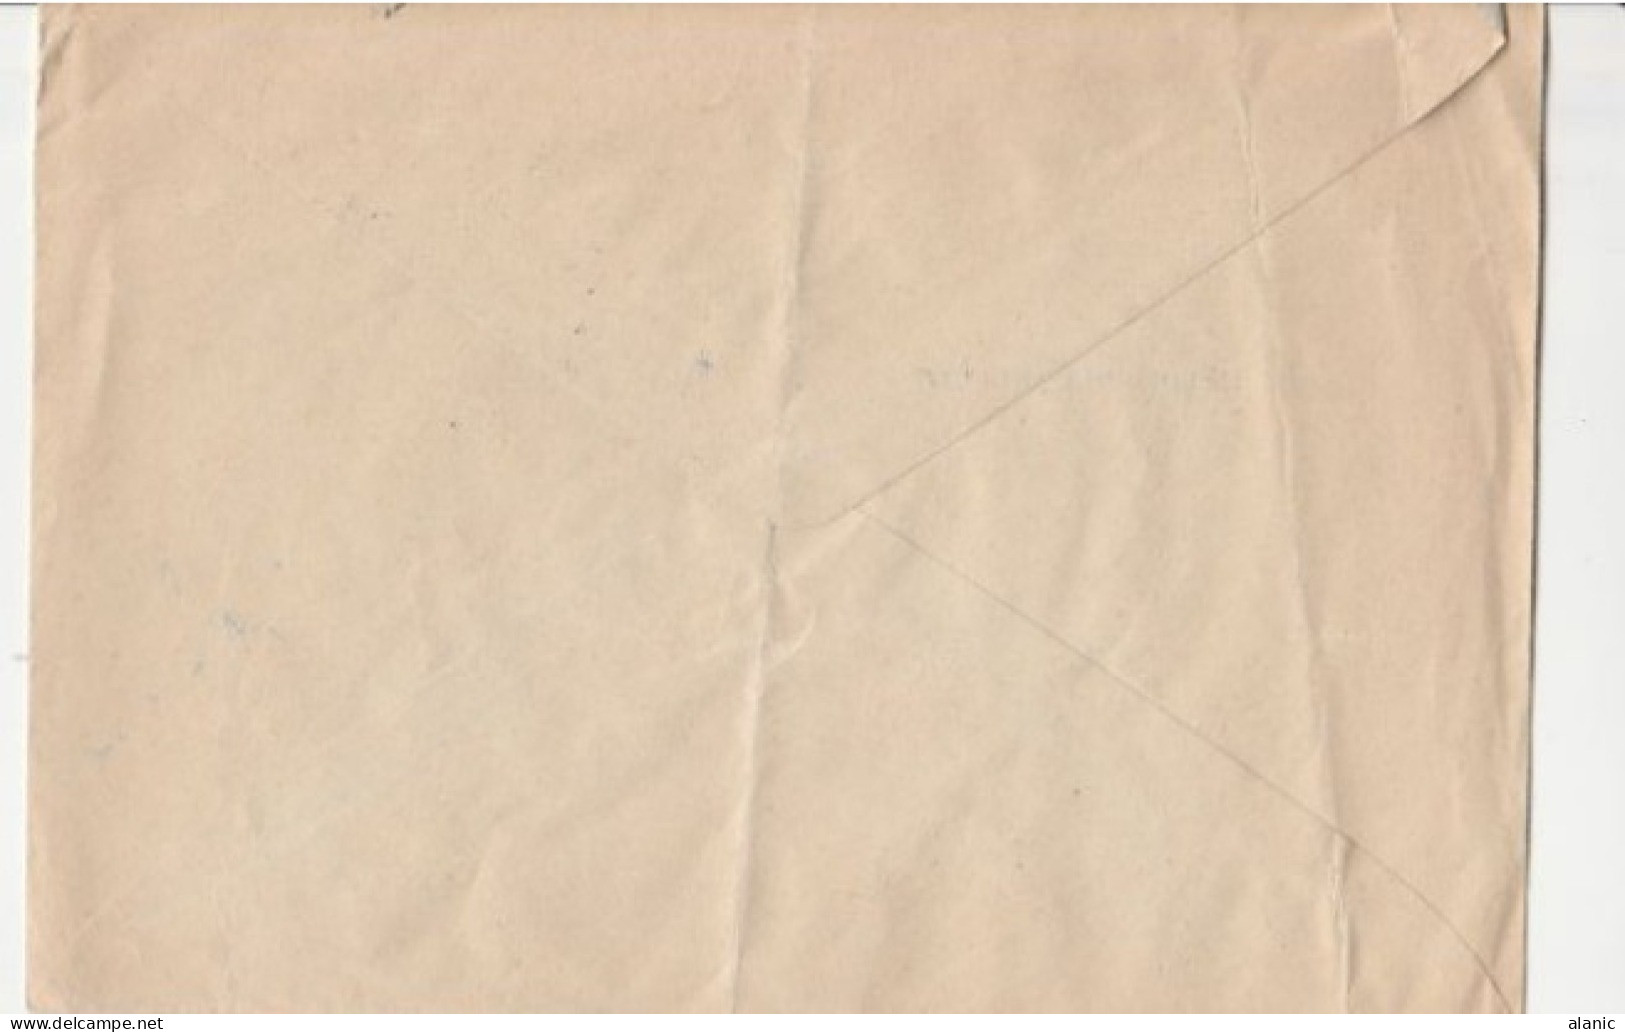 SARRE-Sur Enveloppe Commerciale 1954-N°258+310 De SAARBRUCKEN - Lettres & Documents